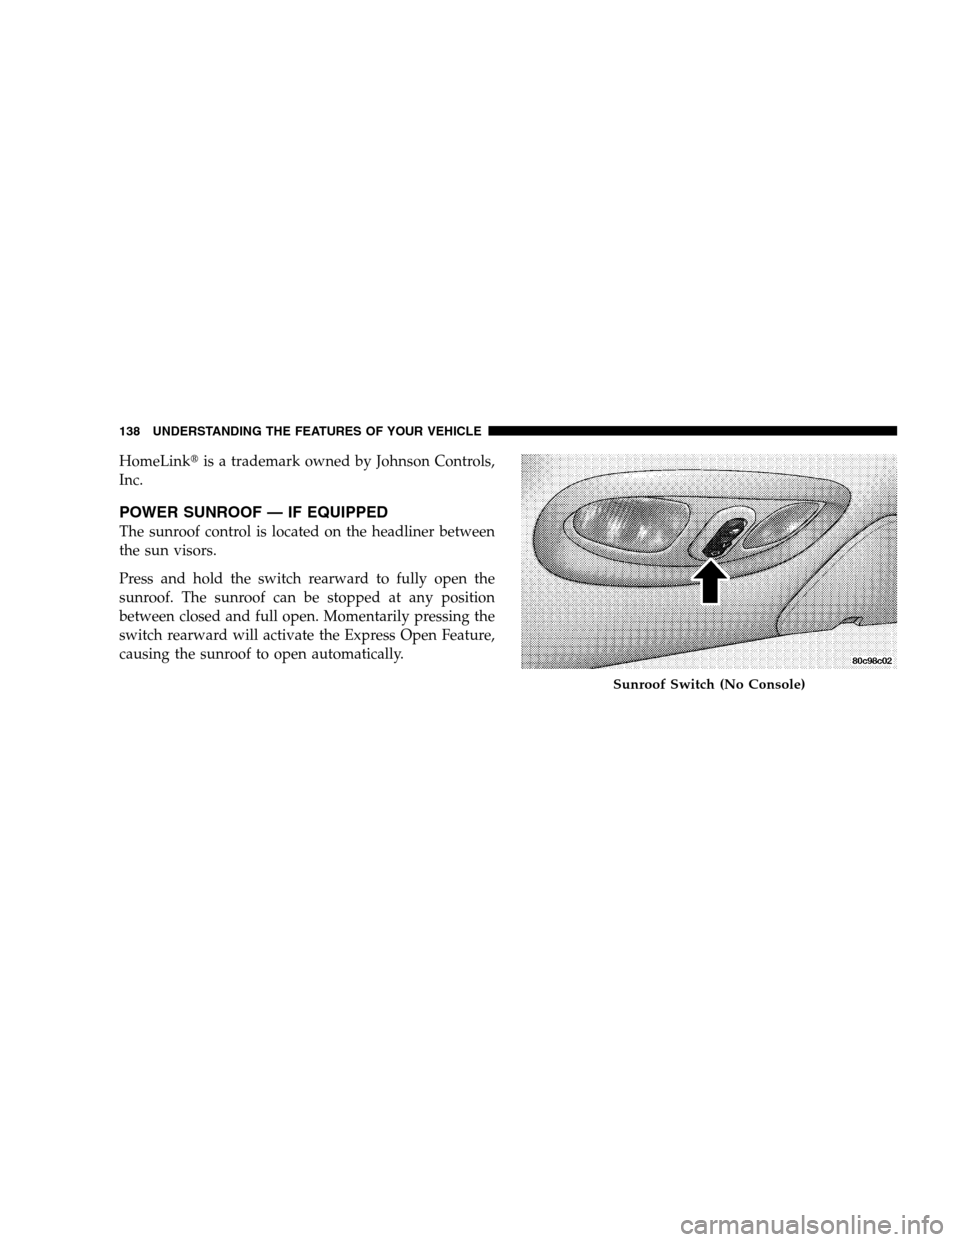 DODGE DAKOTA 2006 3.G Owners Manual HomeLinkis a trademark owned by Johnson Controls, 
Inc.
POWER SUNROOF — IF EQUIPPED
The sunroof control is located on the headliner between
the sun visors. 
Press and hold the switch rearward to fu